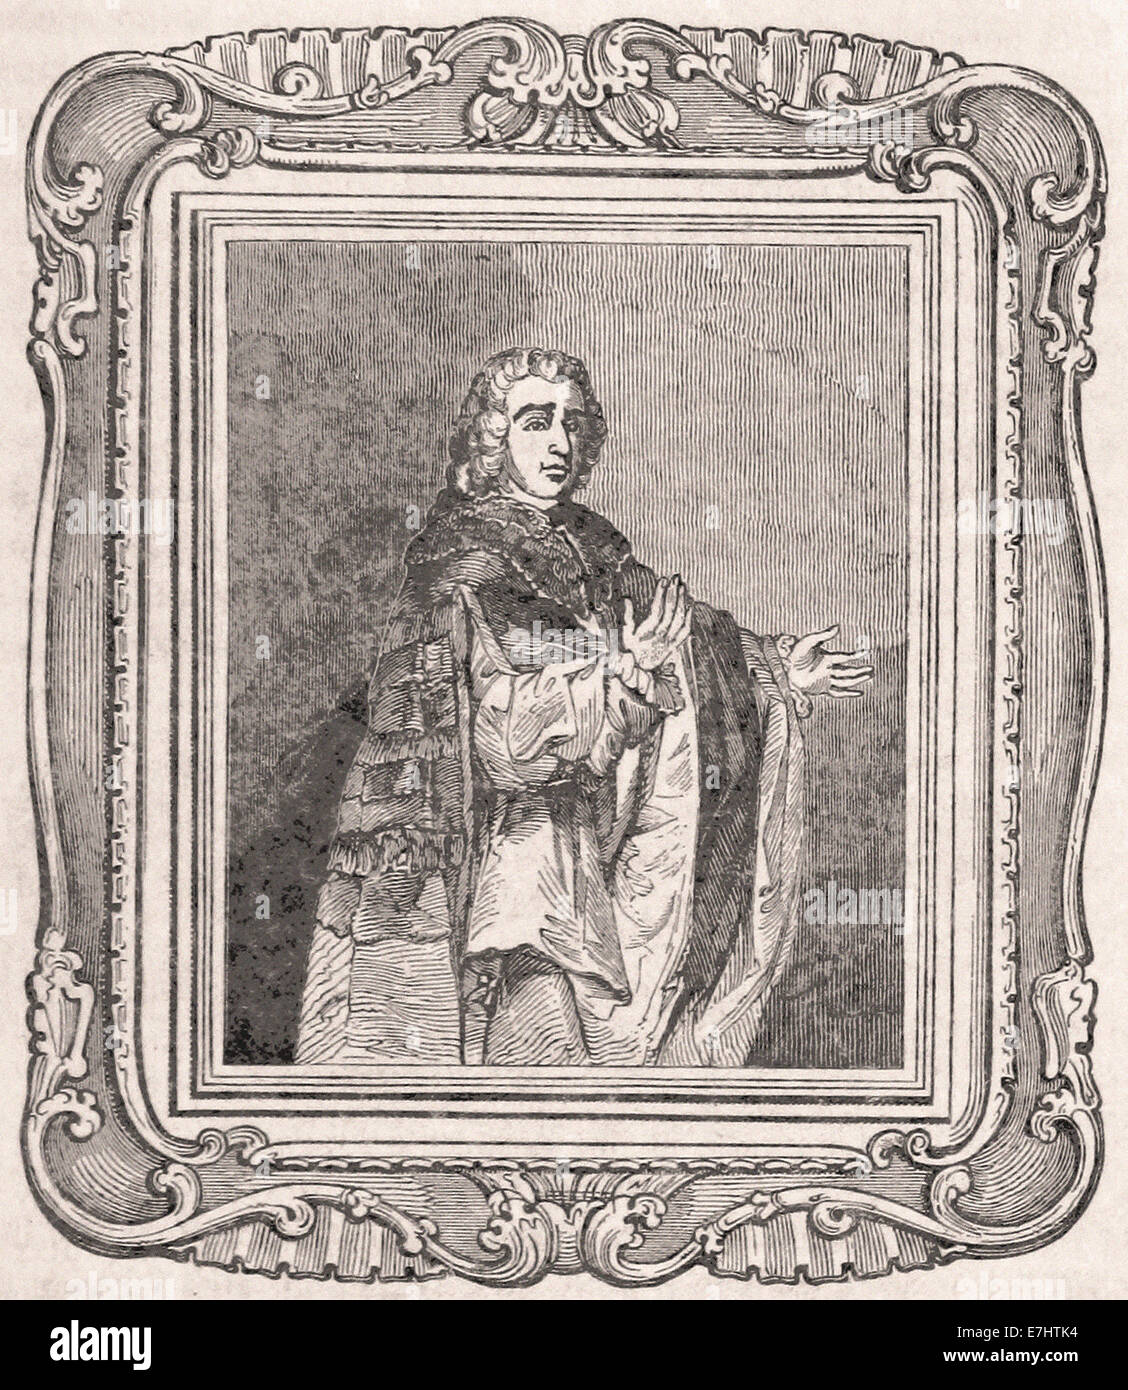 Portait of William Pitt, Earl of Chatham - Engraving - XIX th Century Stock Photo